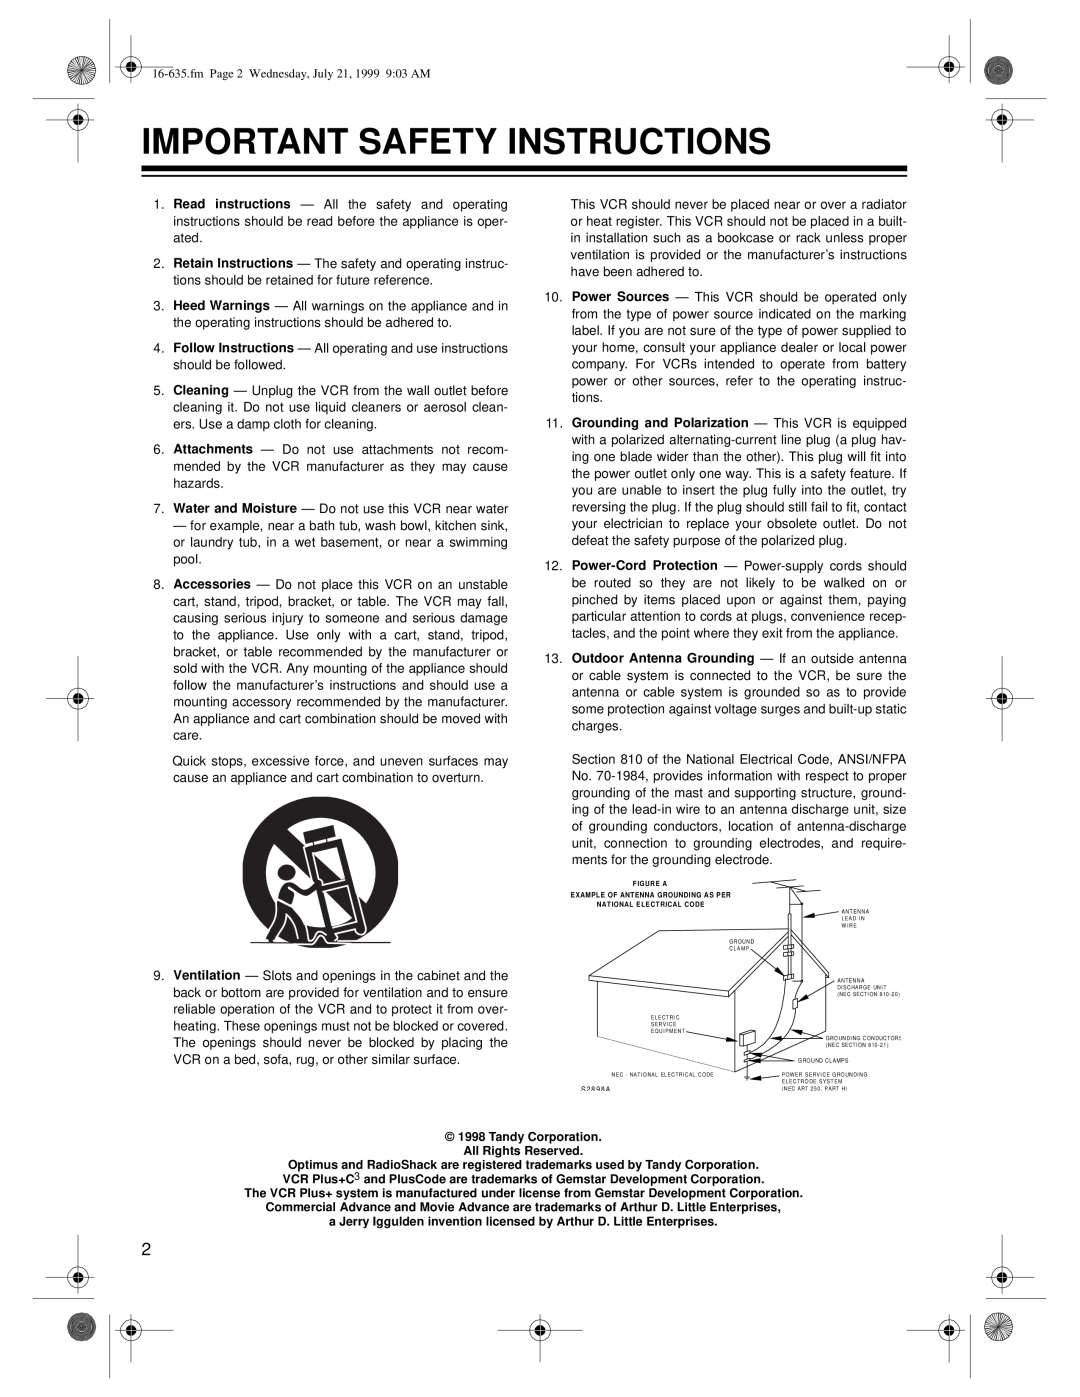 Radio Shack 66 owner manual Important Safety Instructions 